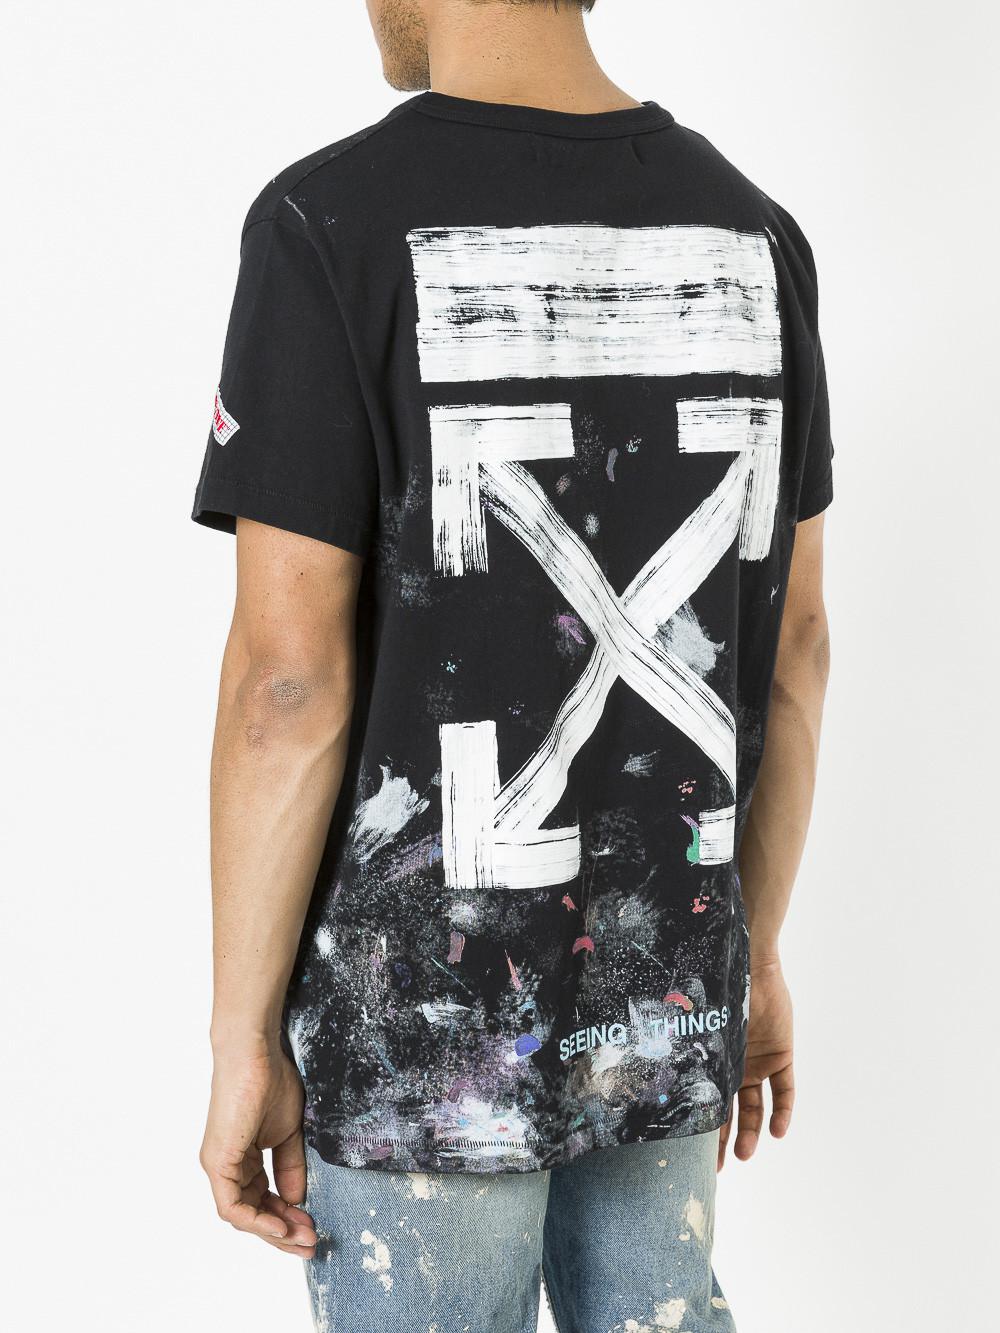 Lyst - Off-White C/O Virgil Abloh Galaxy T-shirt in Black for Men